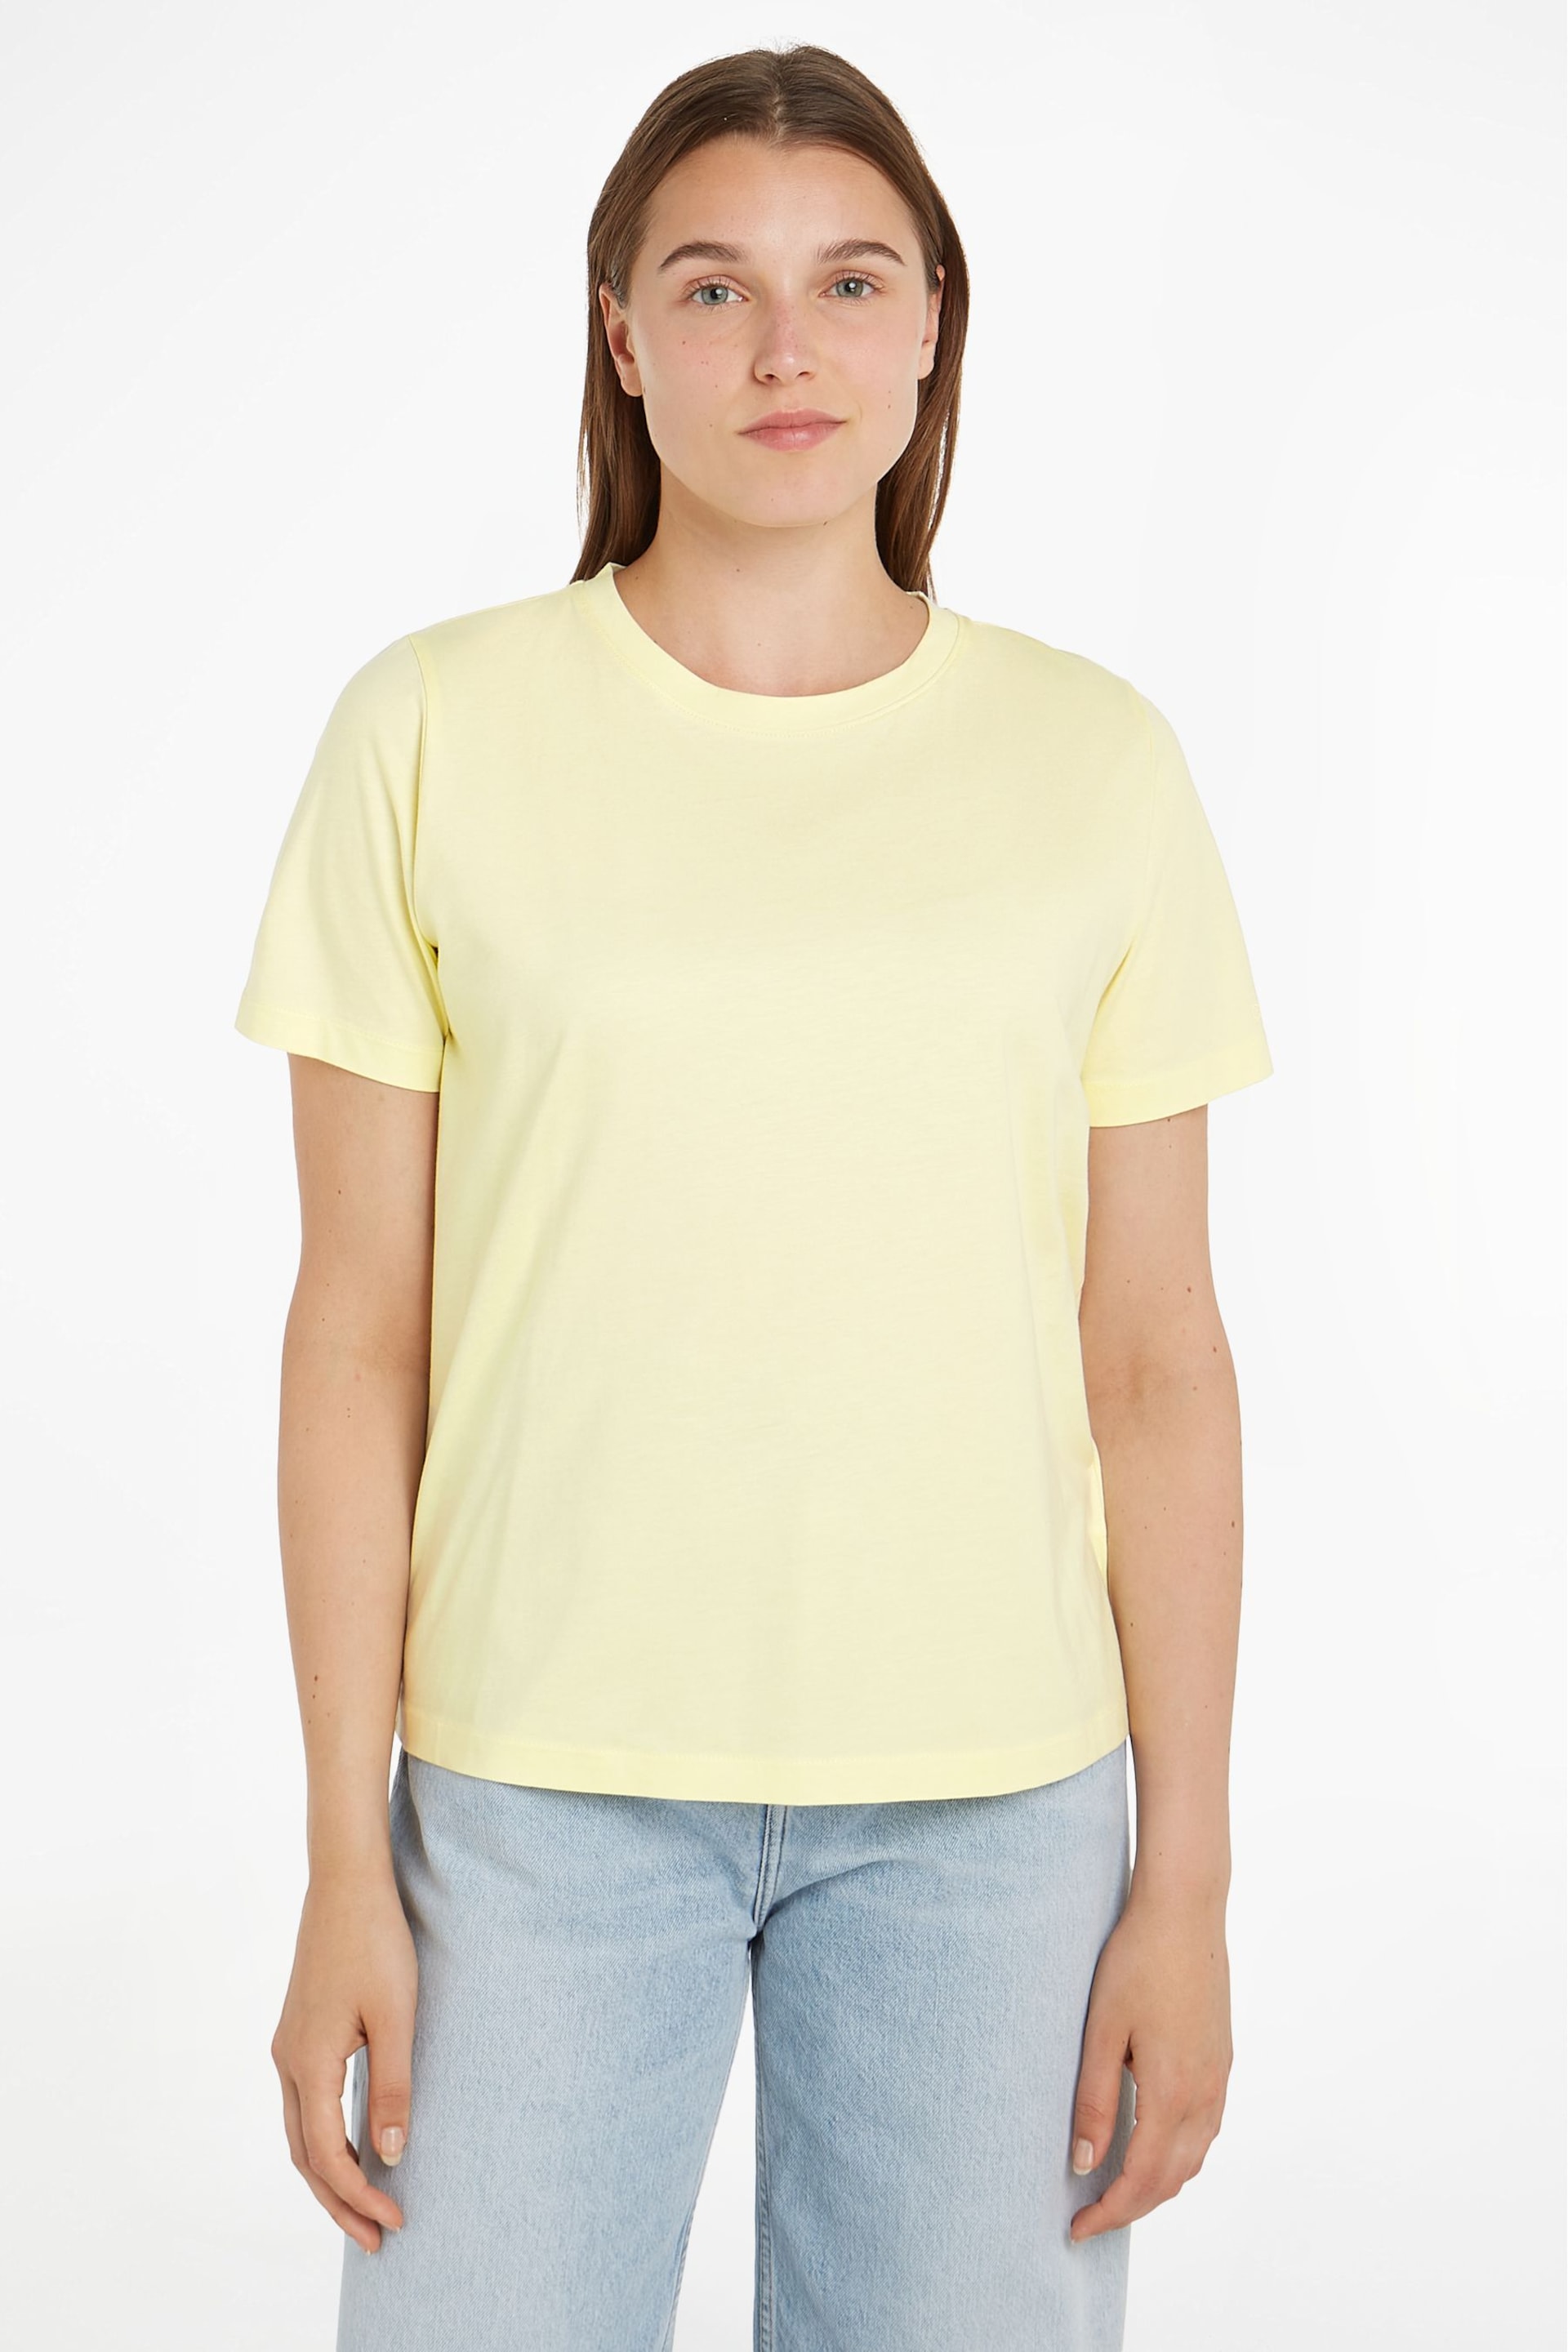 Calvin Klein Yellow Crew Neck T-Shirt - Image 1 of 6